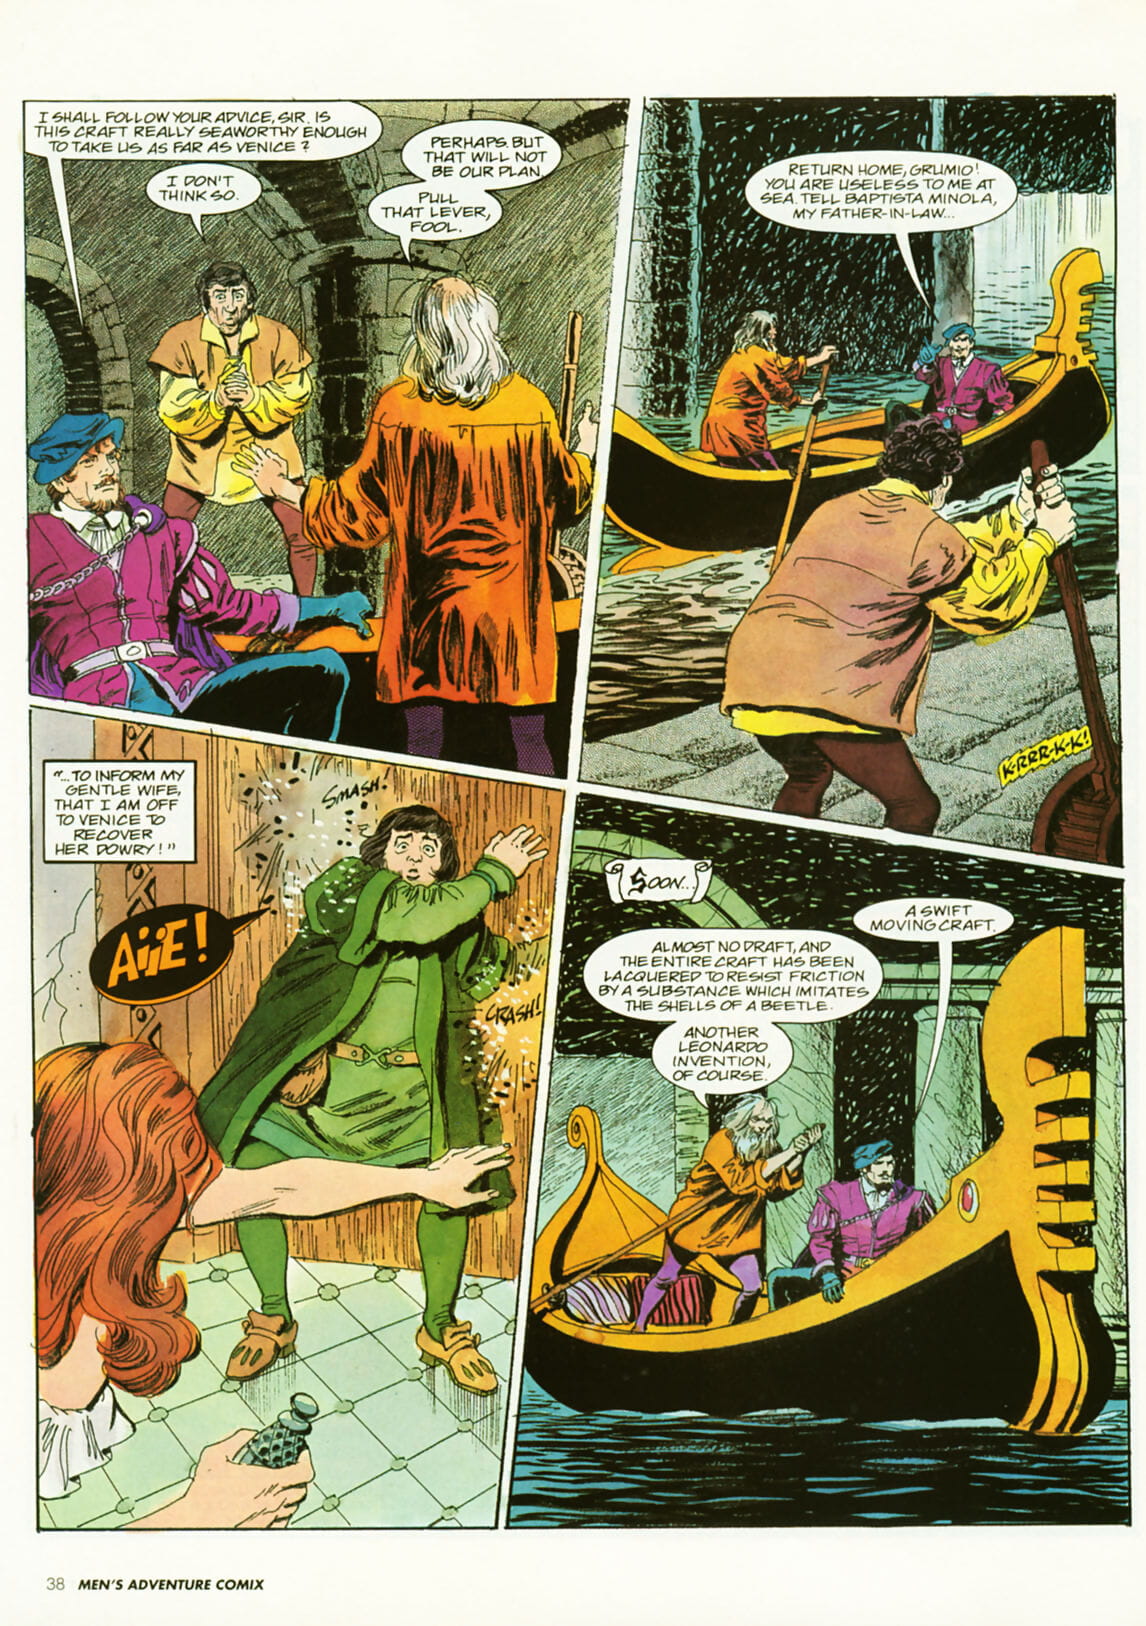 Penthouse Mens Adventure Comix #5 page 1